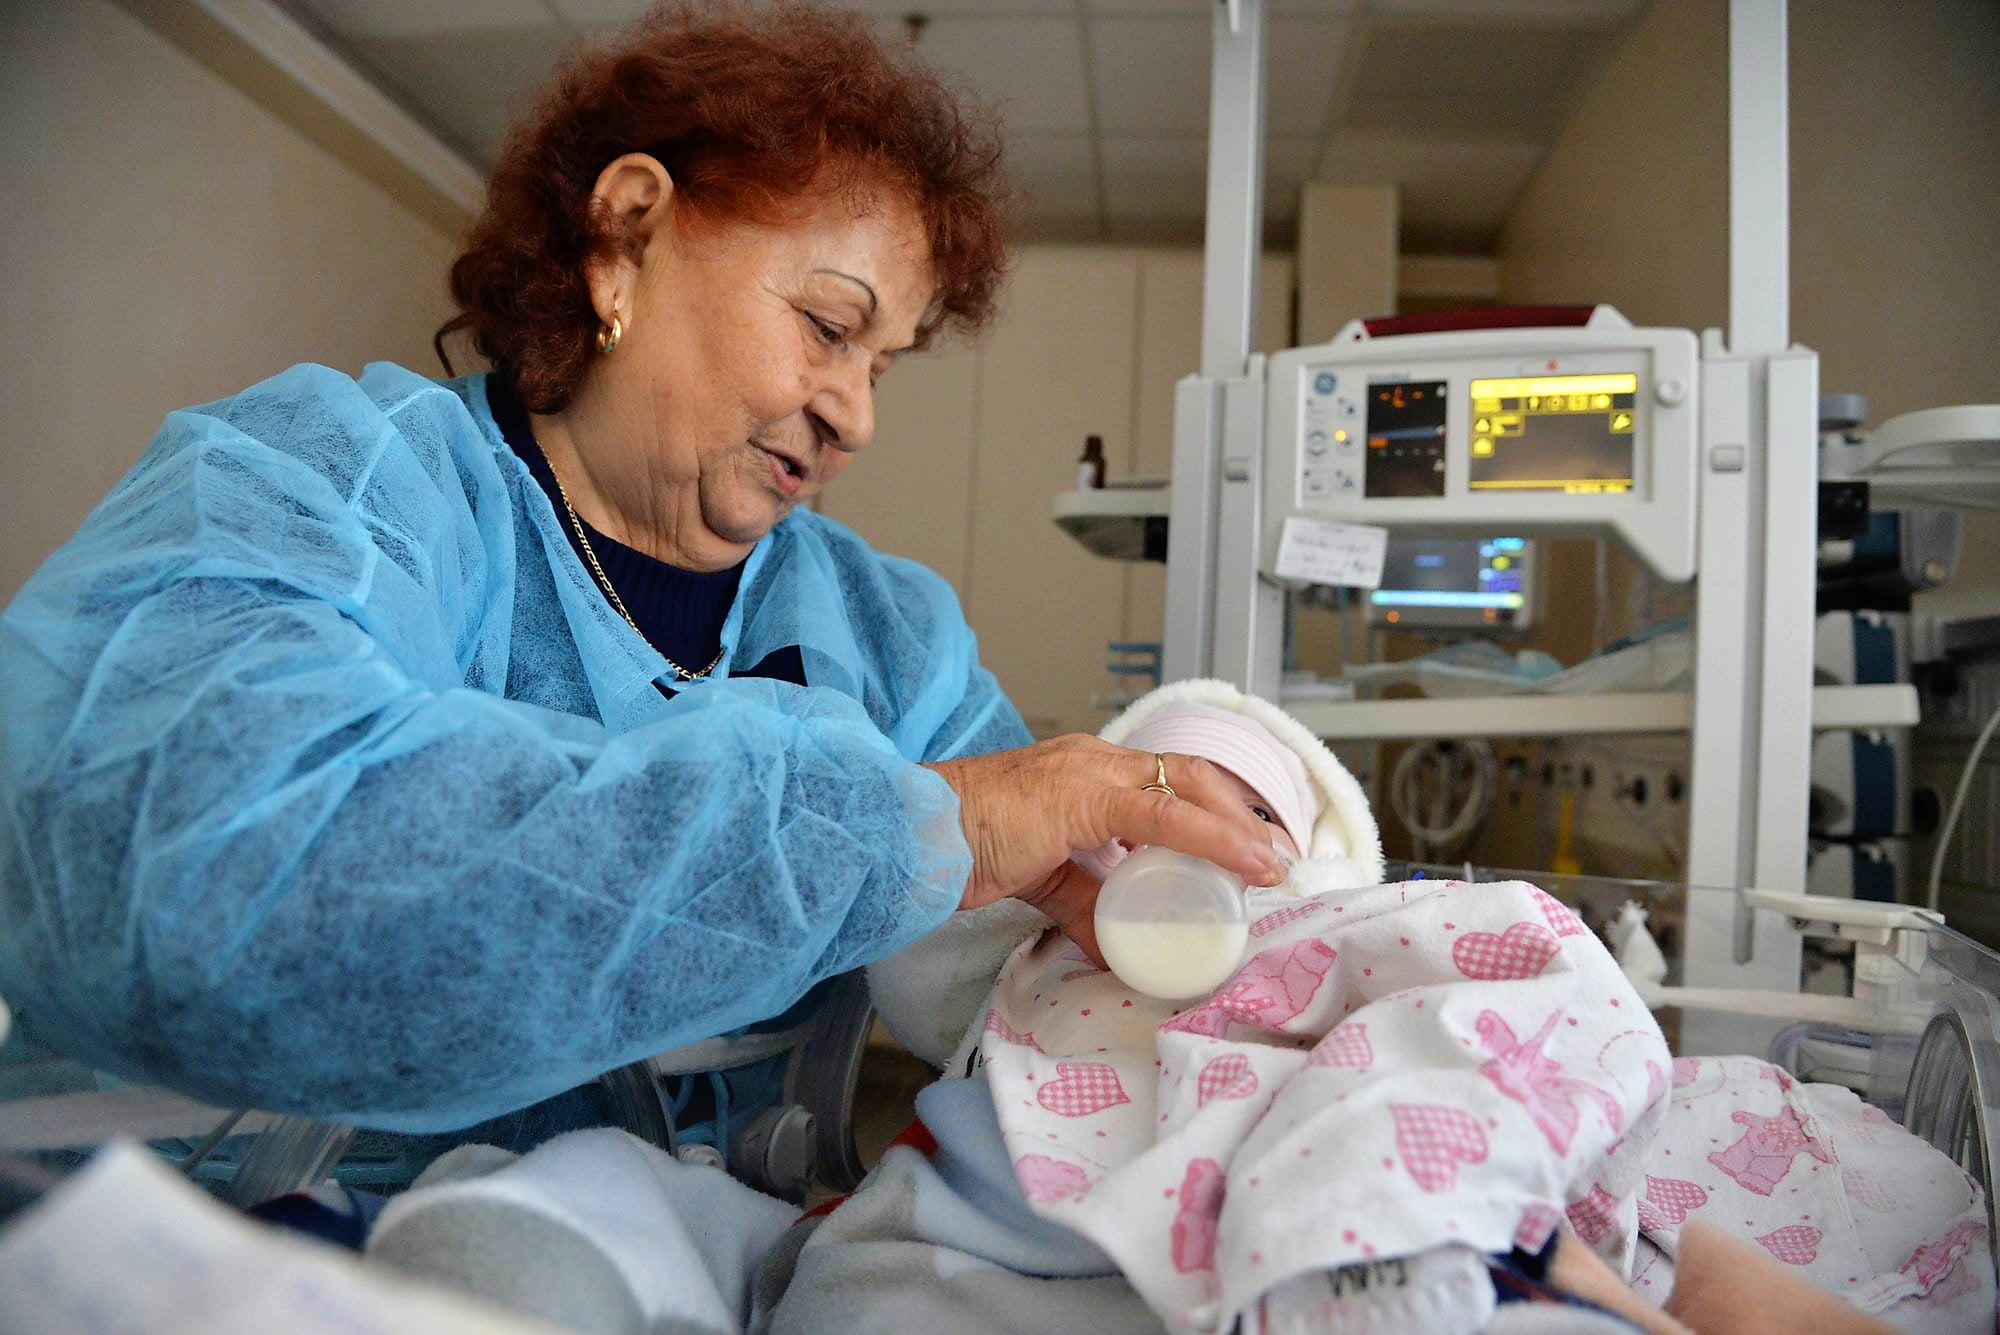 Bunicile voluntare ofera iubire nou-nascutilor bolnaviori si abandonati: "Ii schimbam, le dam sa manance, le cantam... " | Demamici.ro